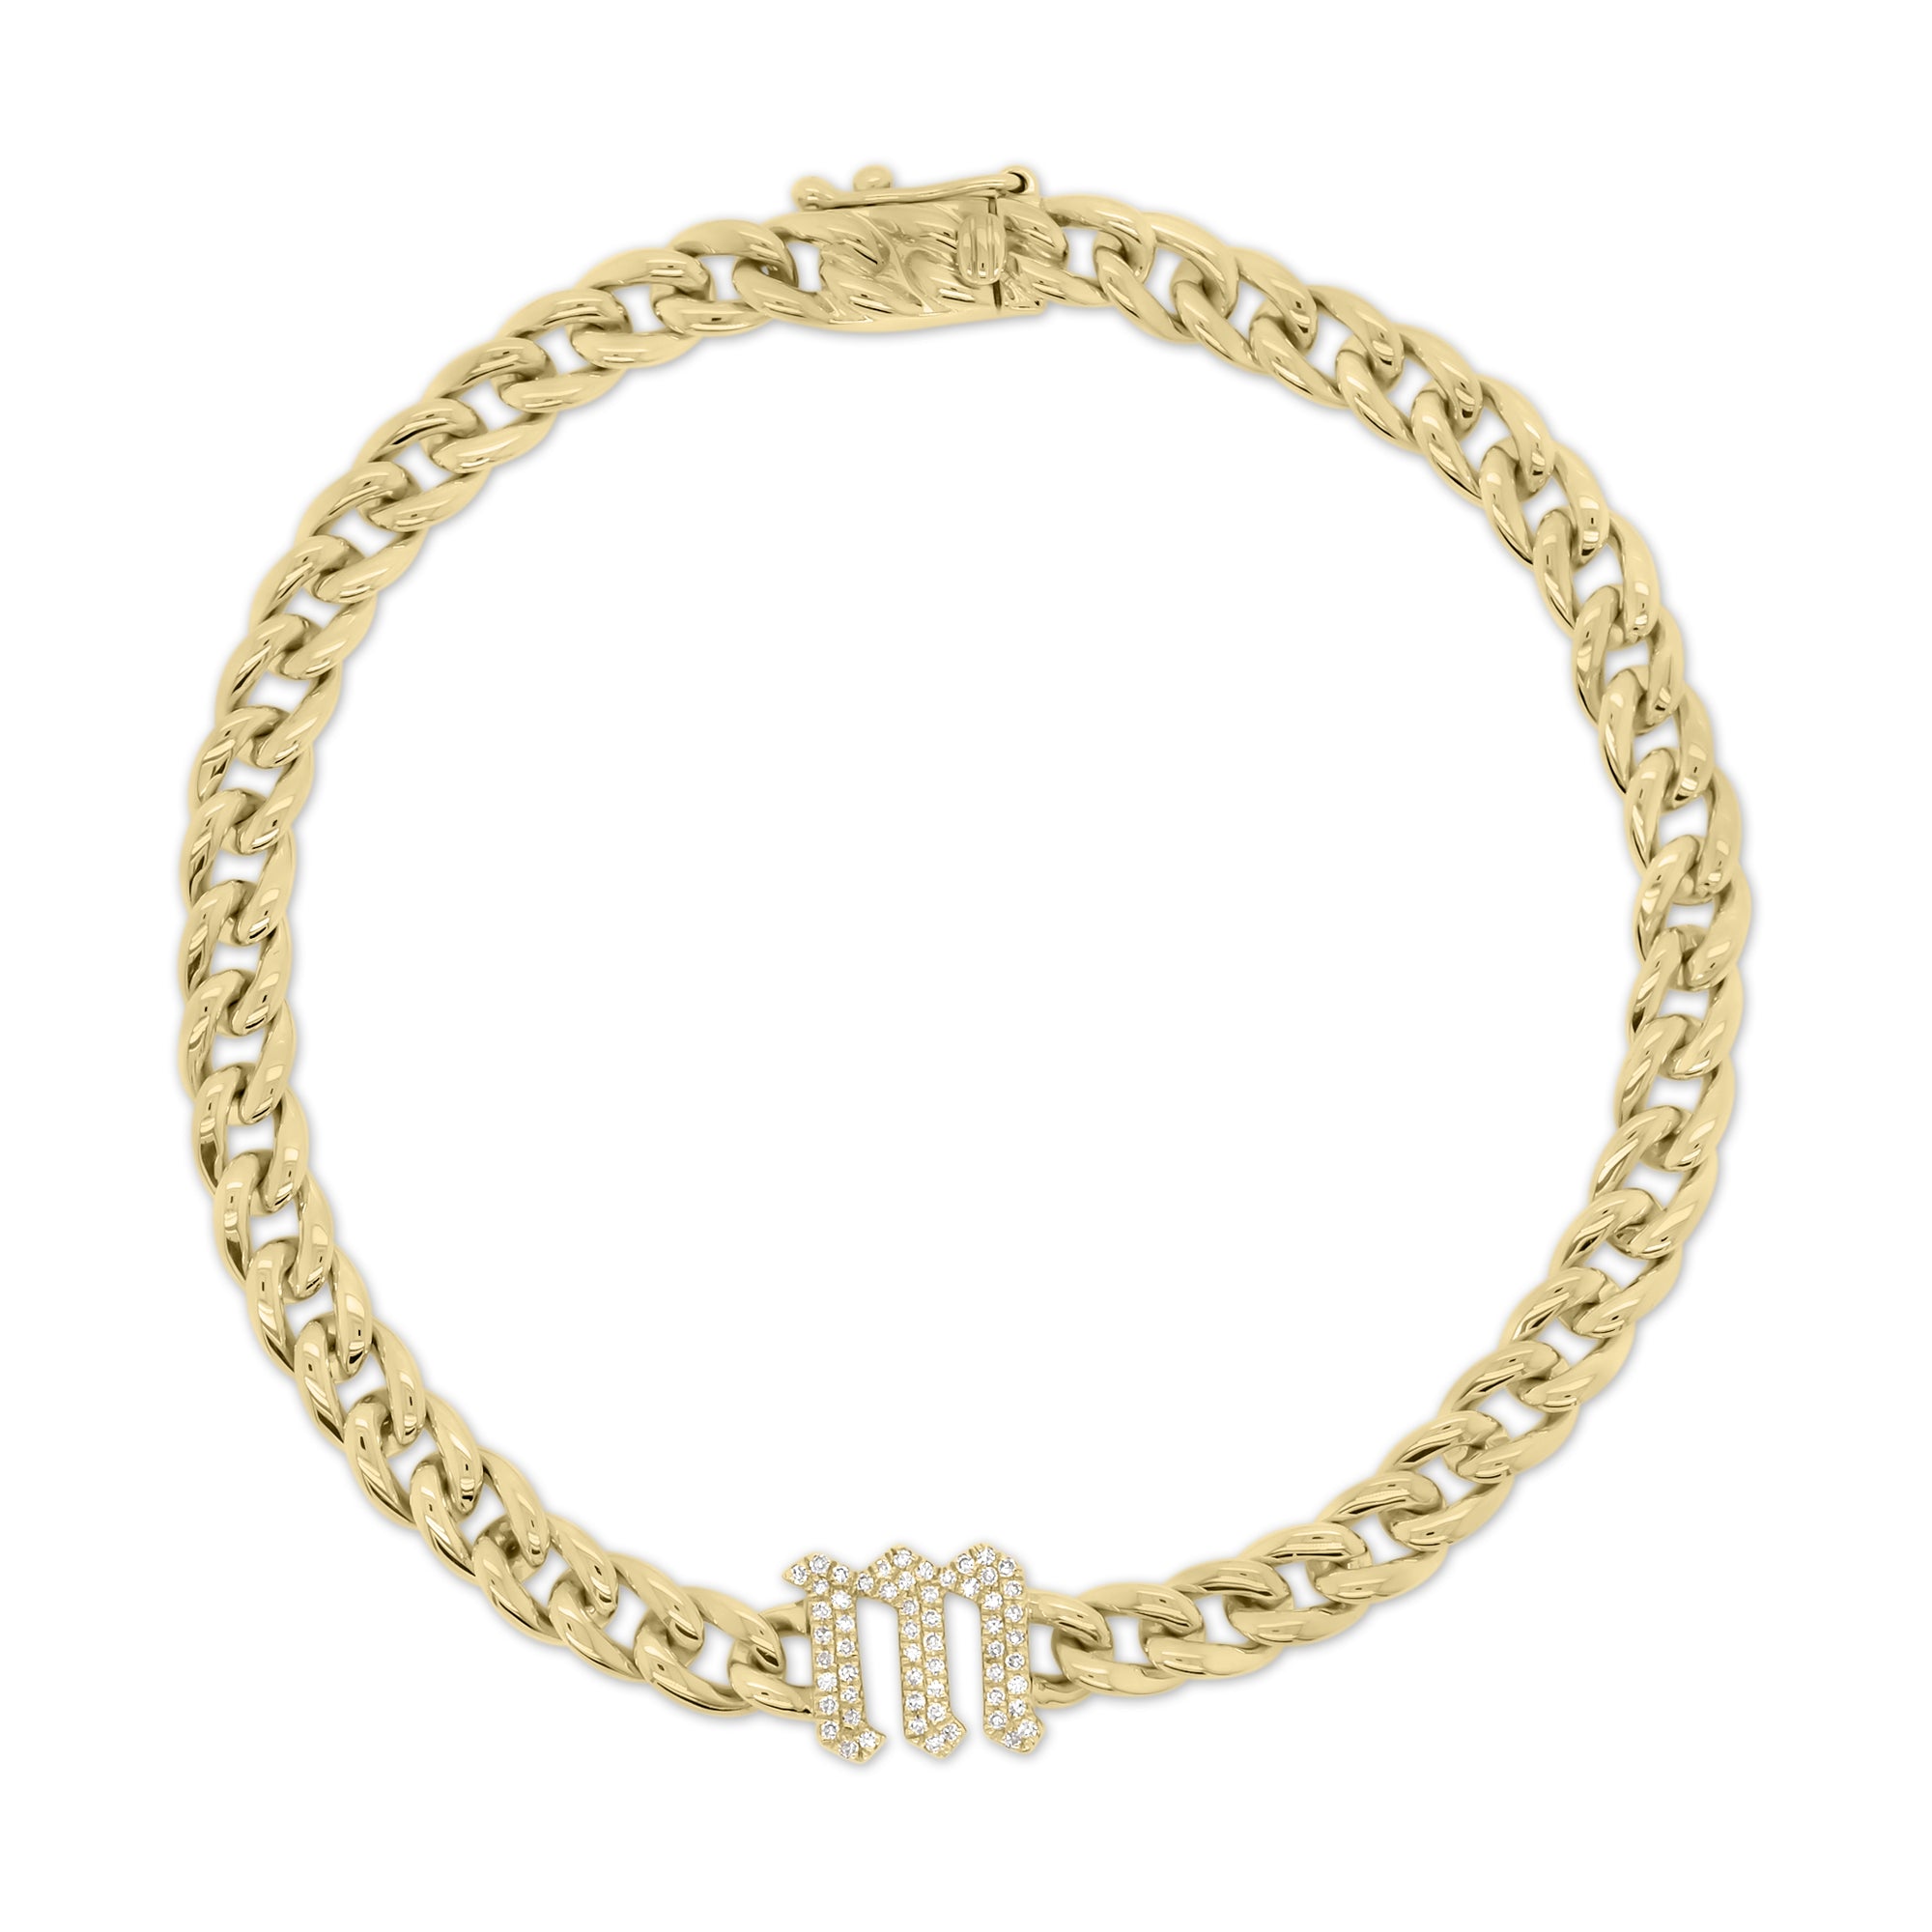 Diamond Gothic Initial Bracelet - 14K yellow gold weighing 10.80 grams - 58 round diamonds totaling 0.12 carats